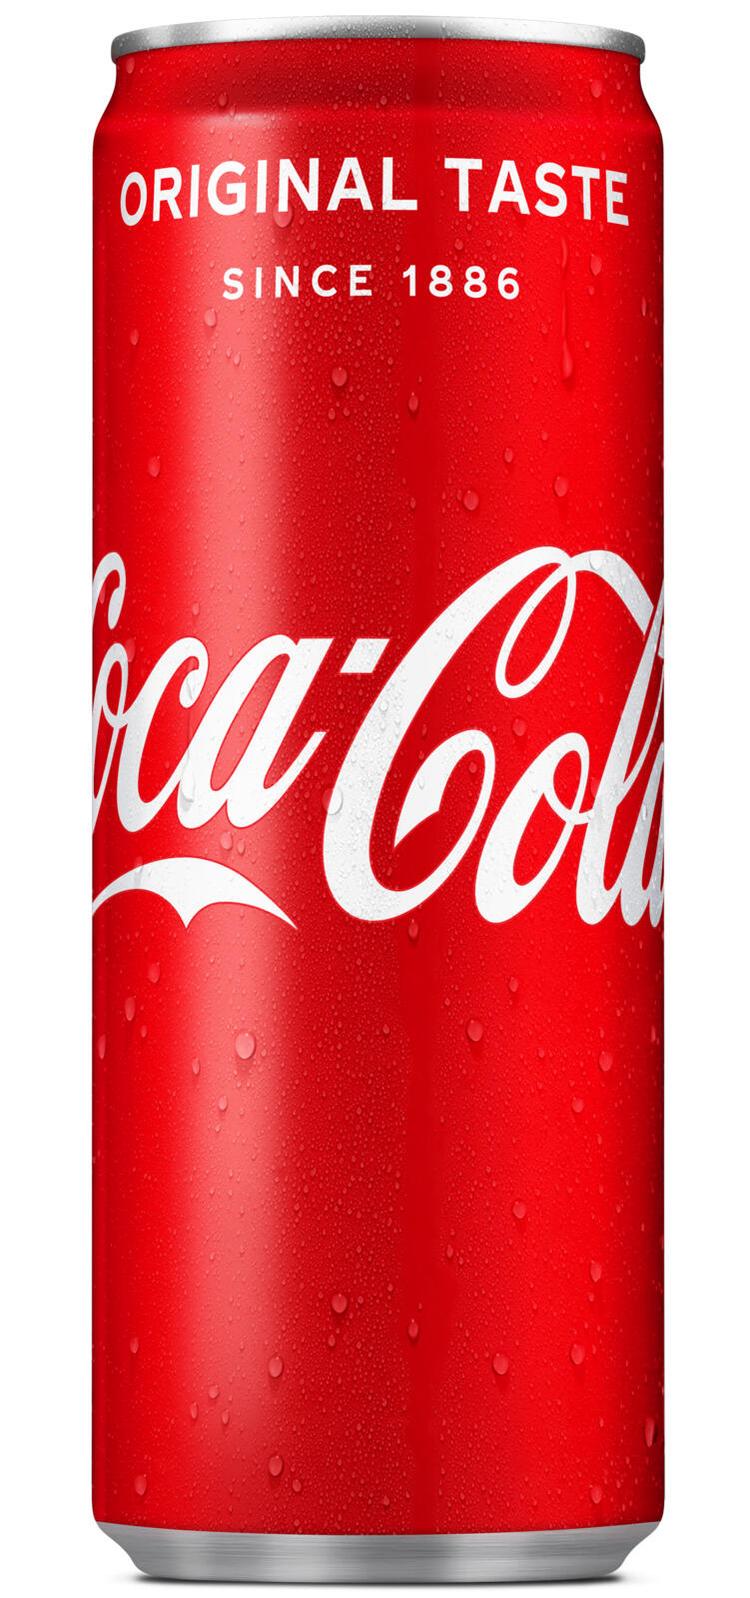 Coca-Cola Original Taste virvoitusjuoma tölkki 0,25 L